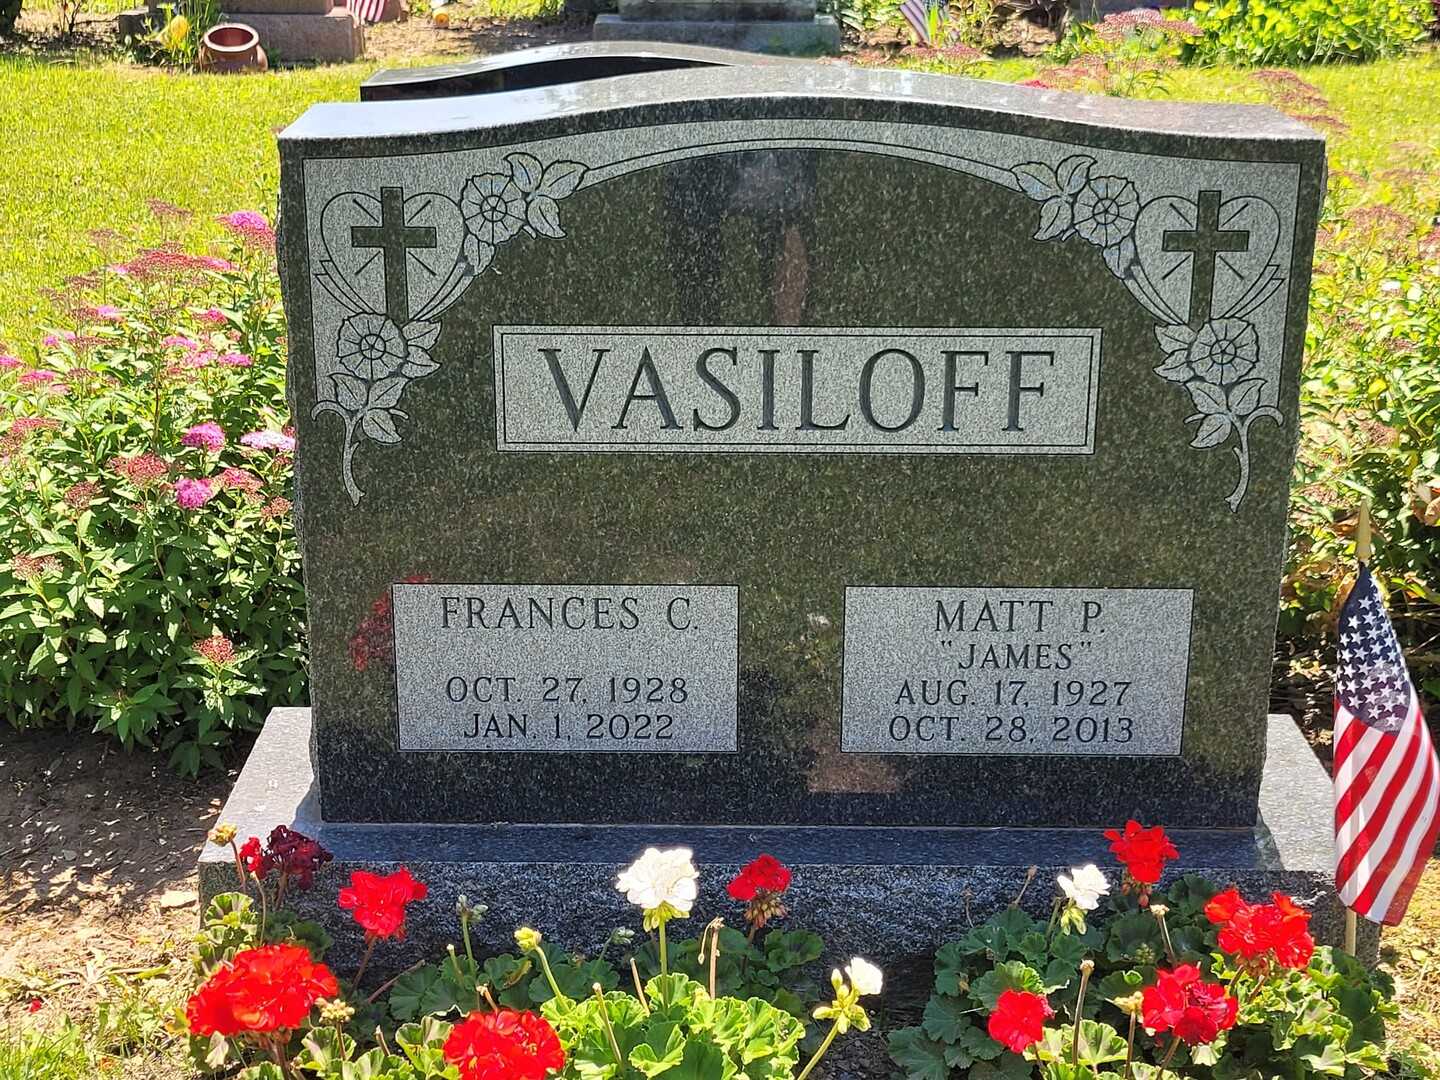 Matt P. "Jam" Vasiloff's grave. Photo 3